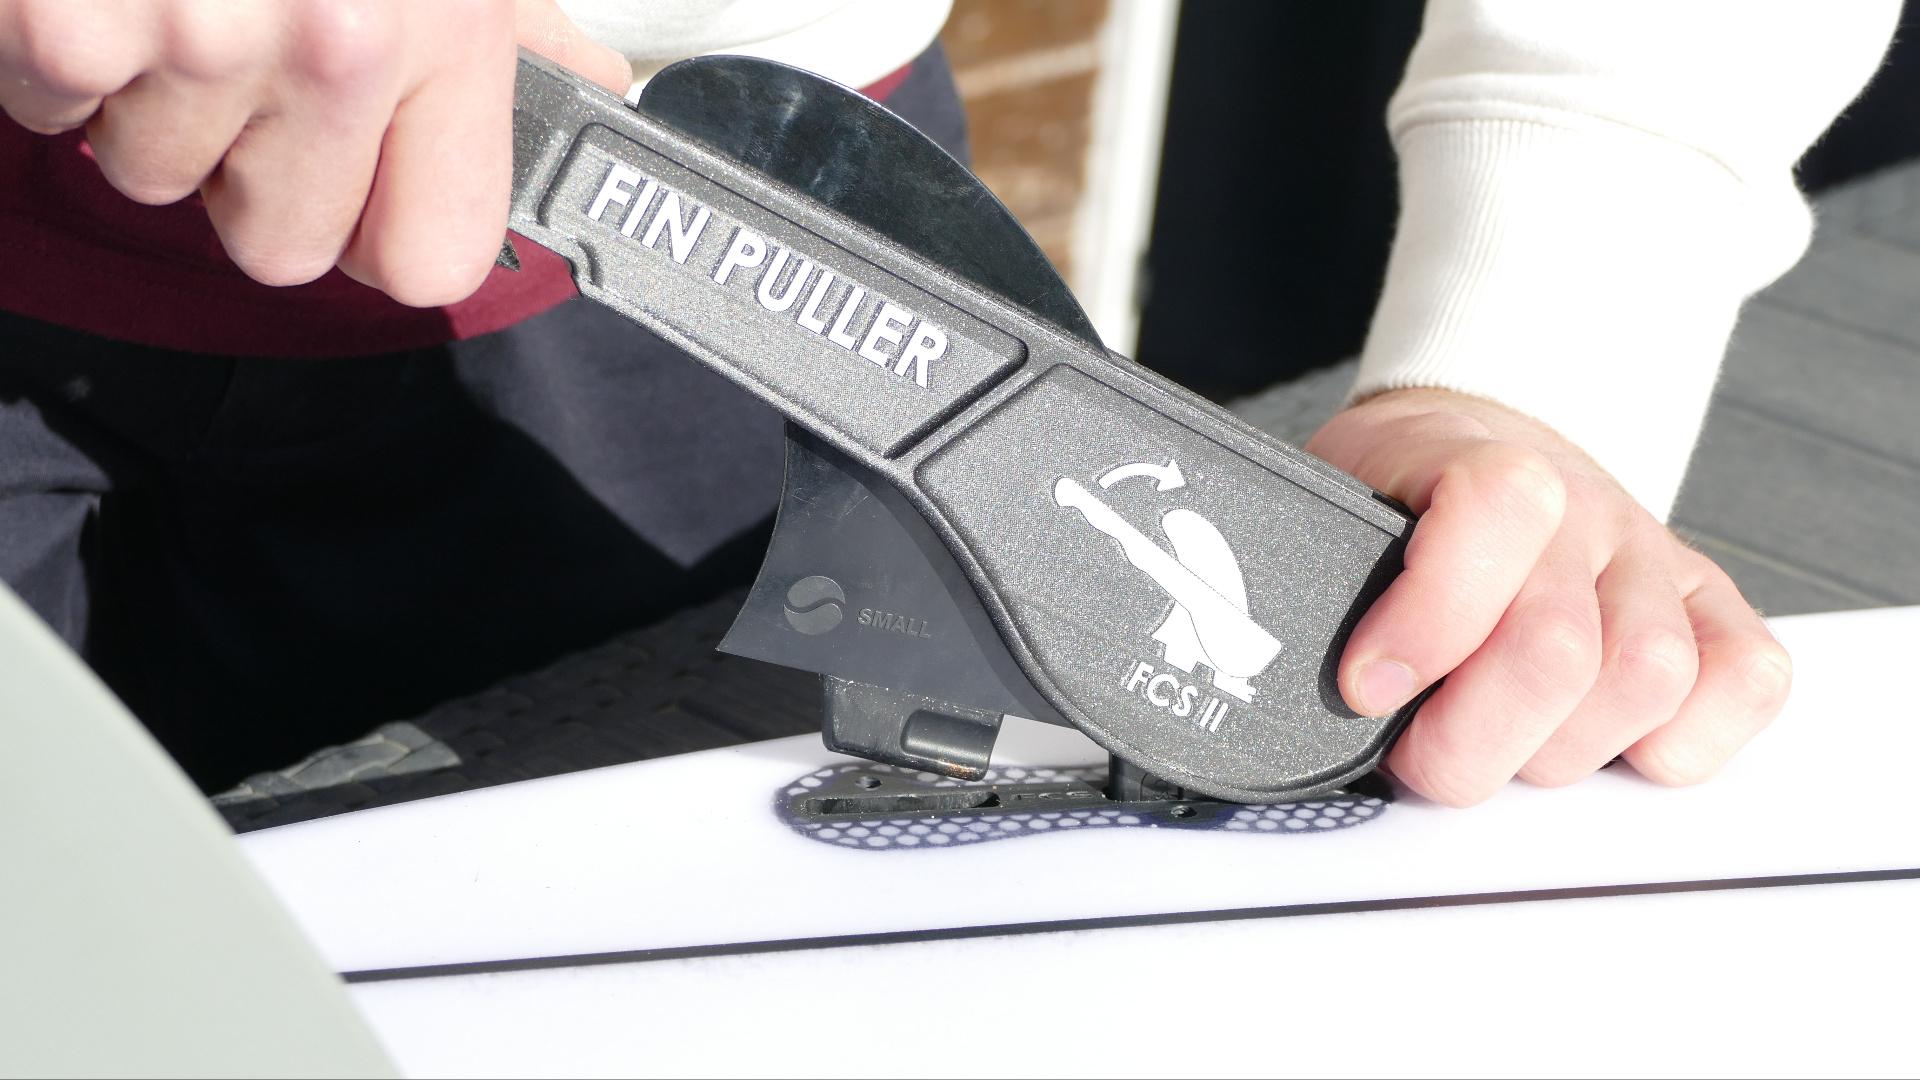 Surf Fin Puller with Bottle Opener 3d model